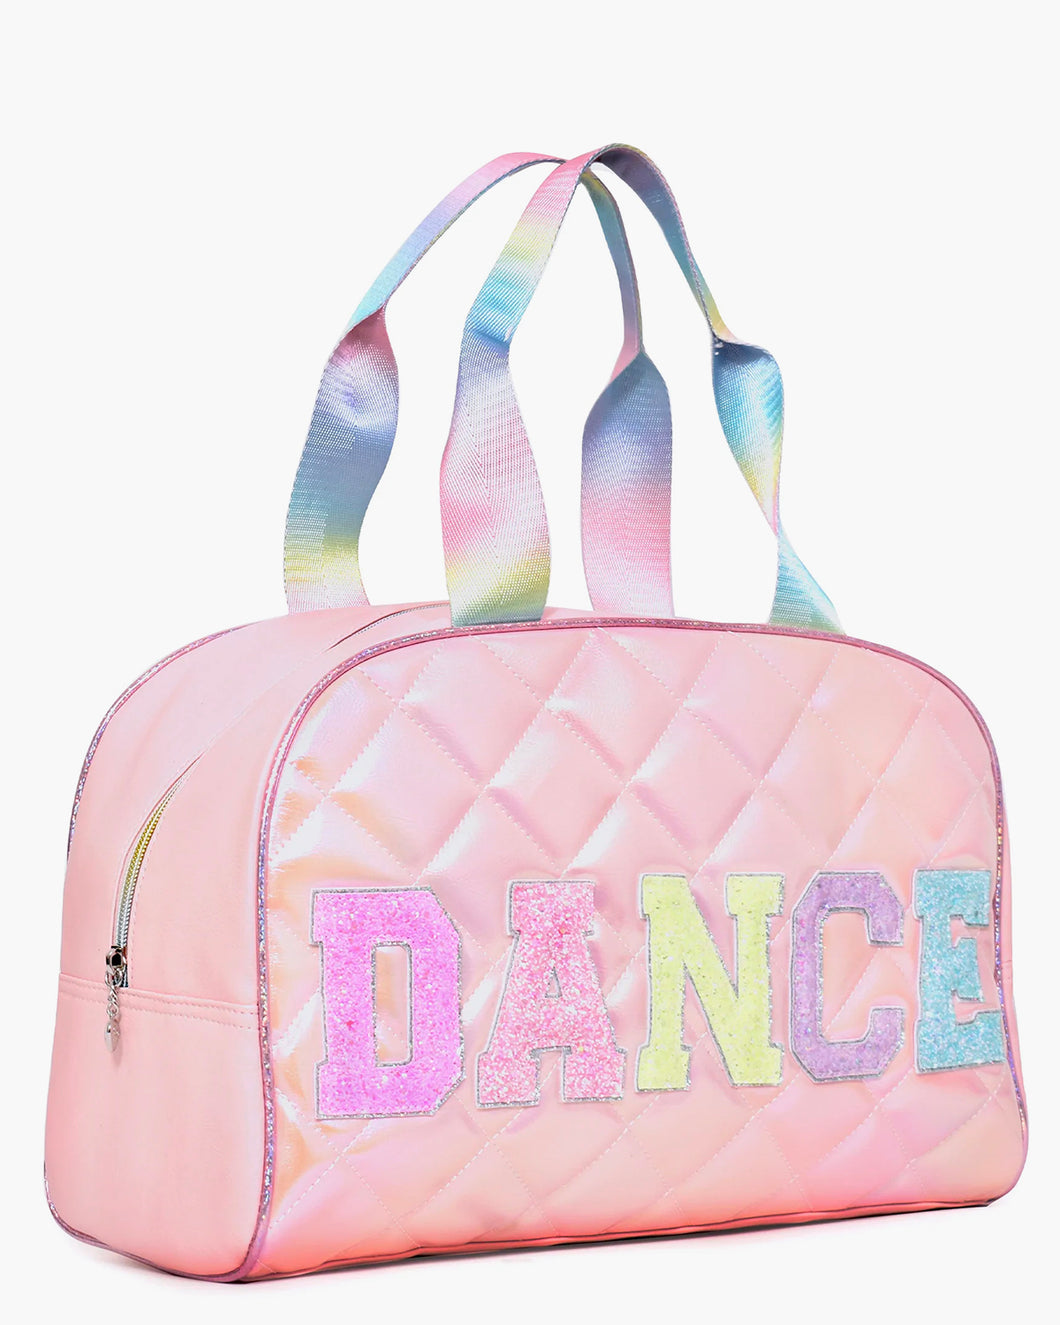 DANCE Quilted Medium Duffle Bag